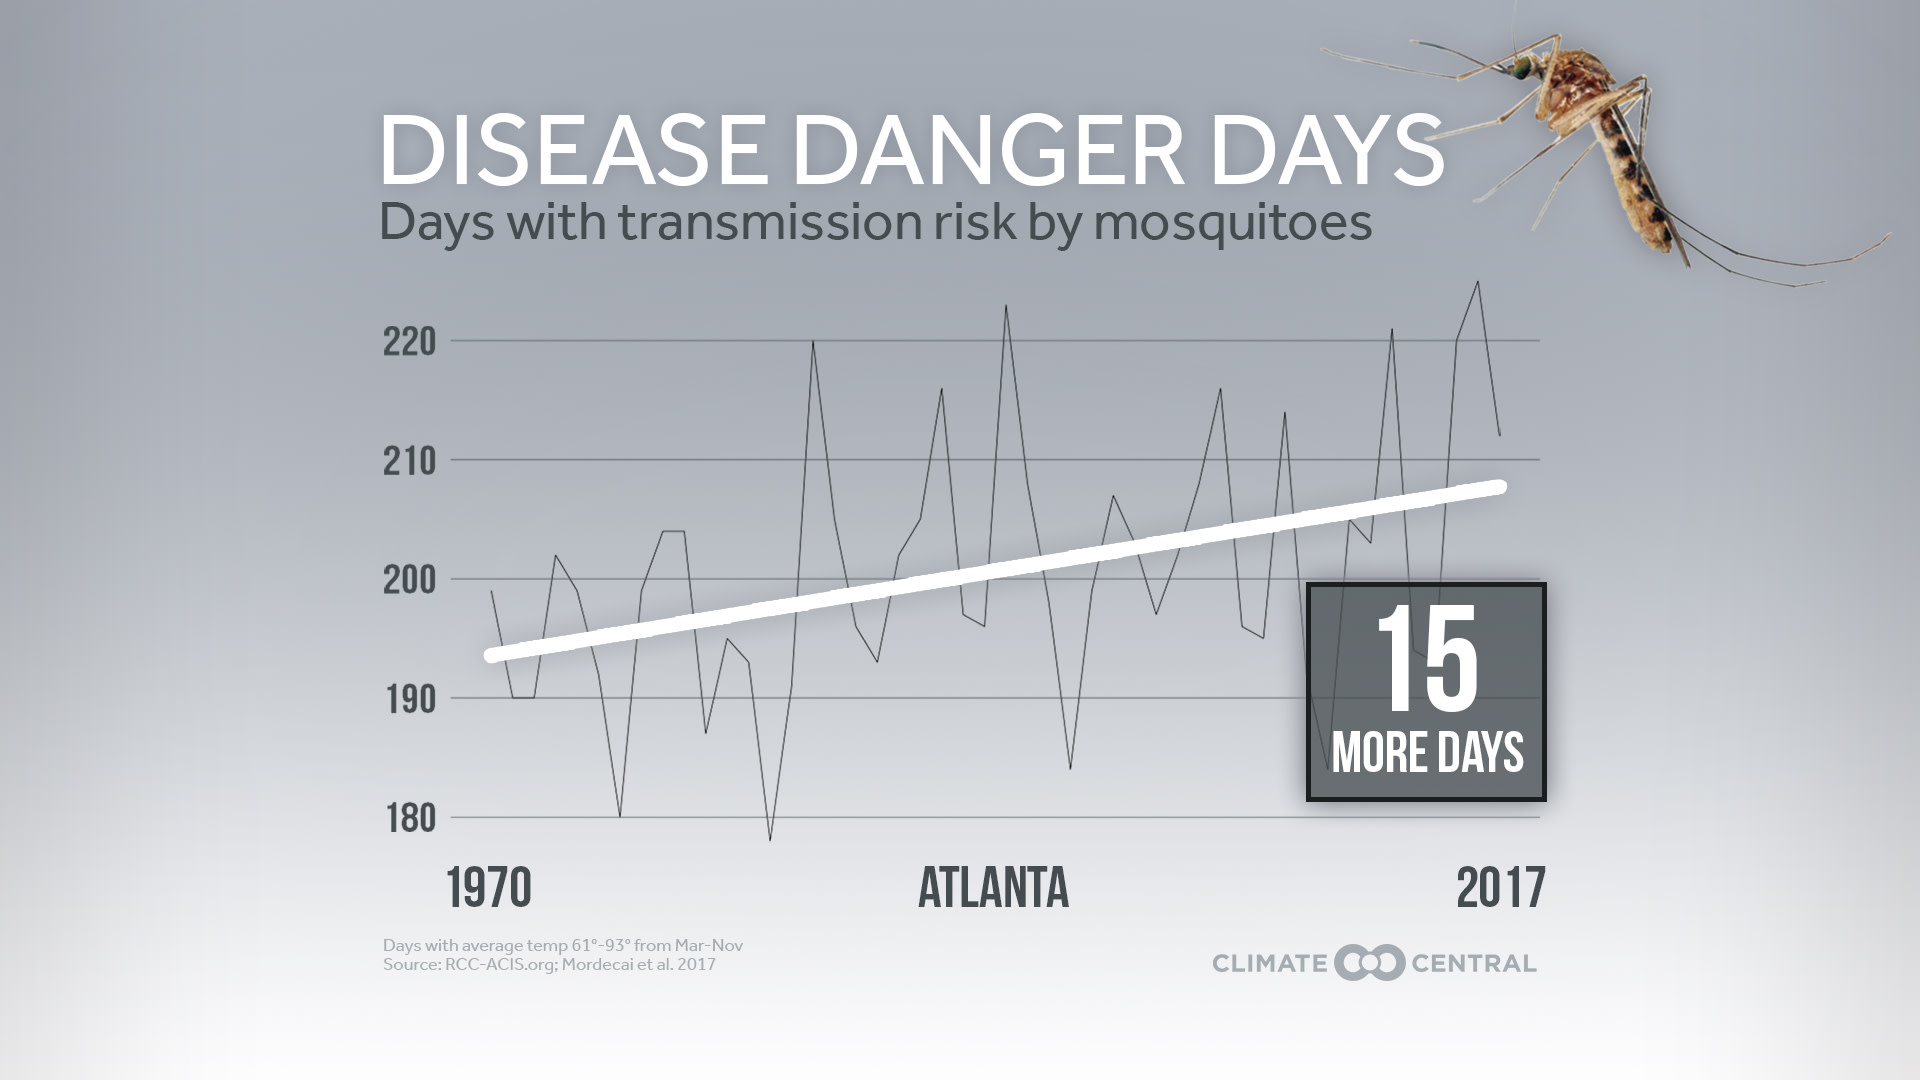 Market - Disease Danger Days on the Rise